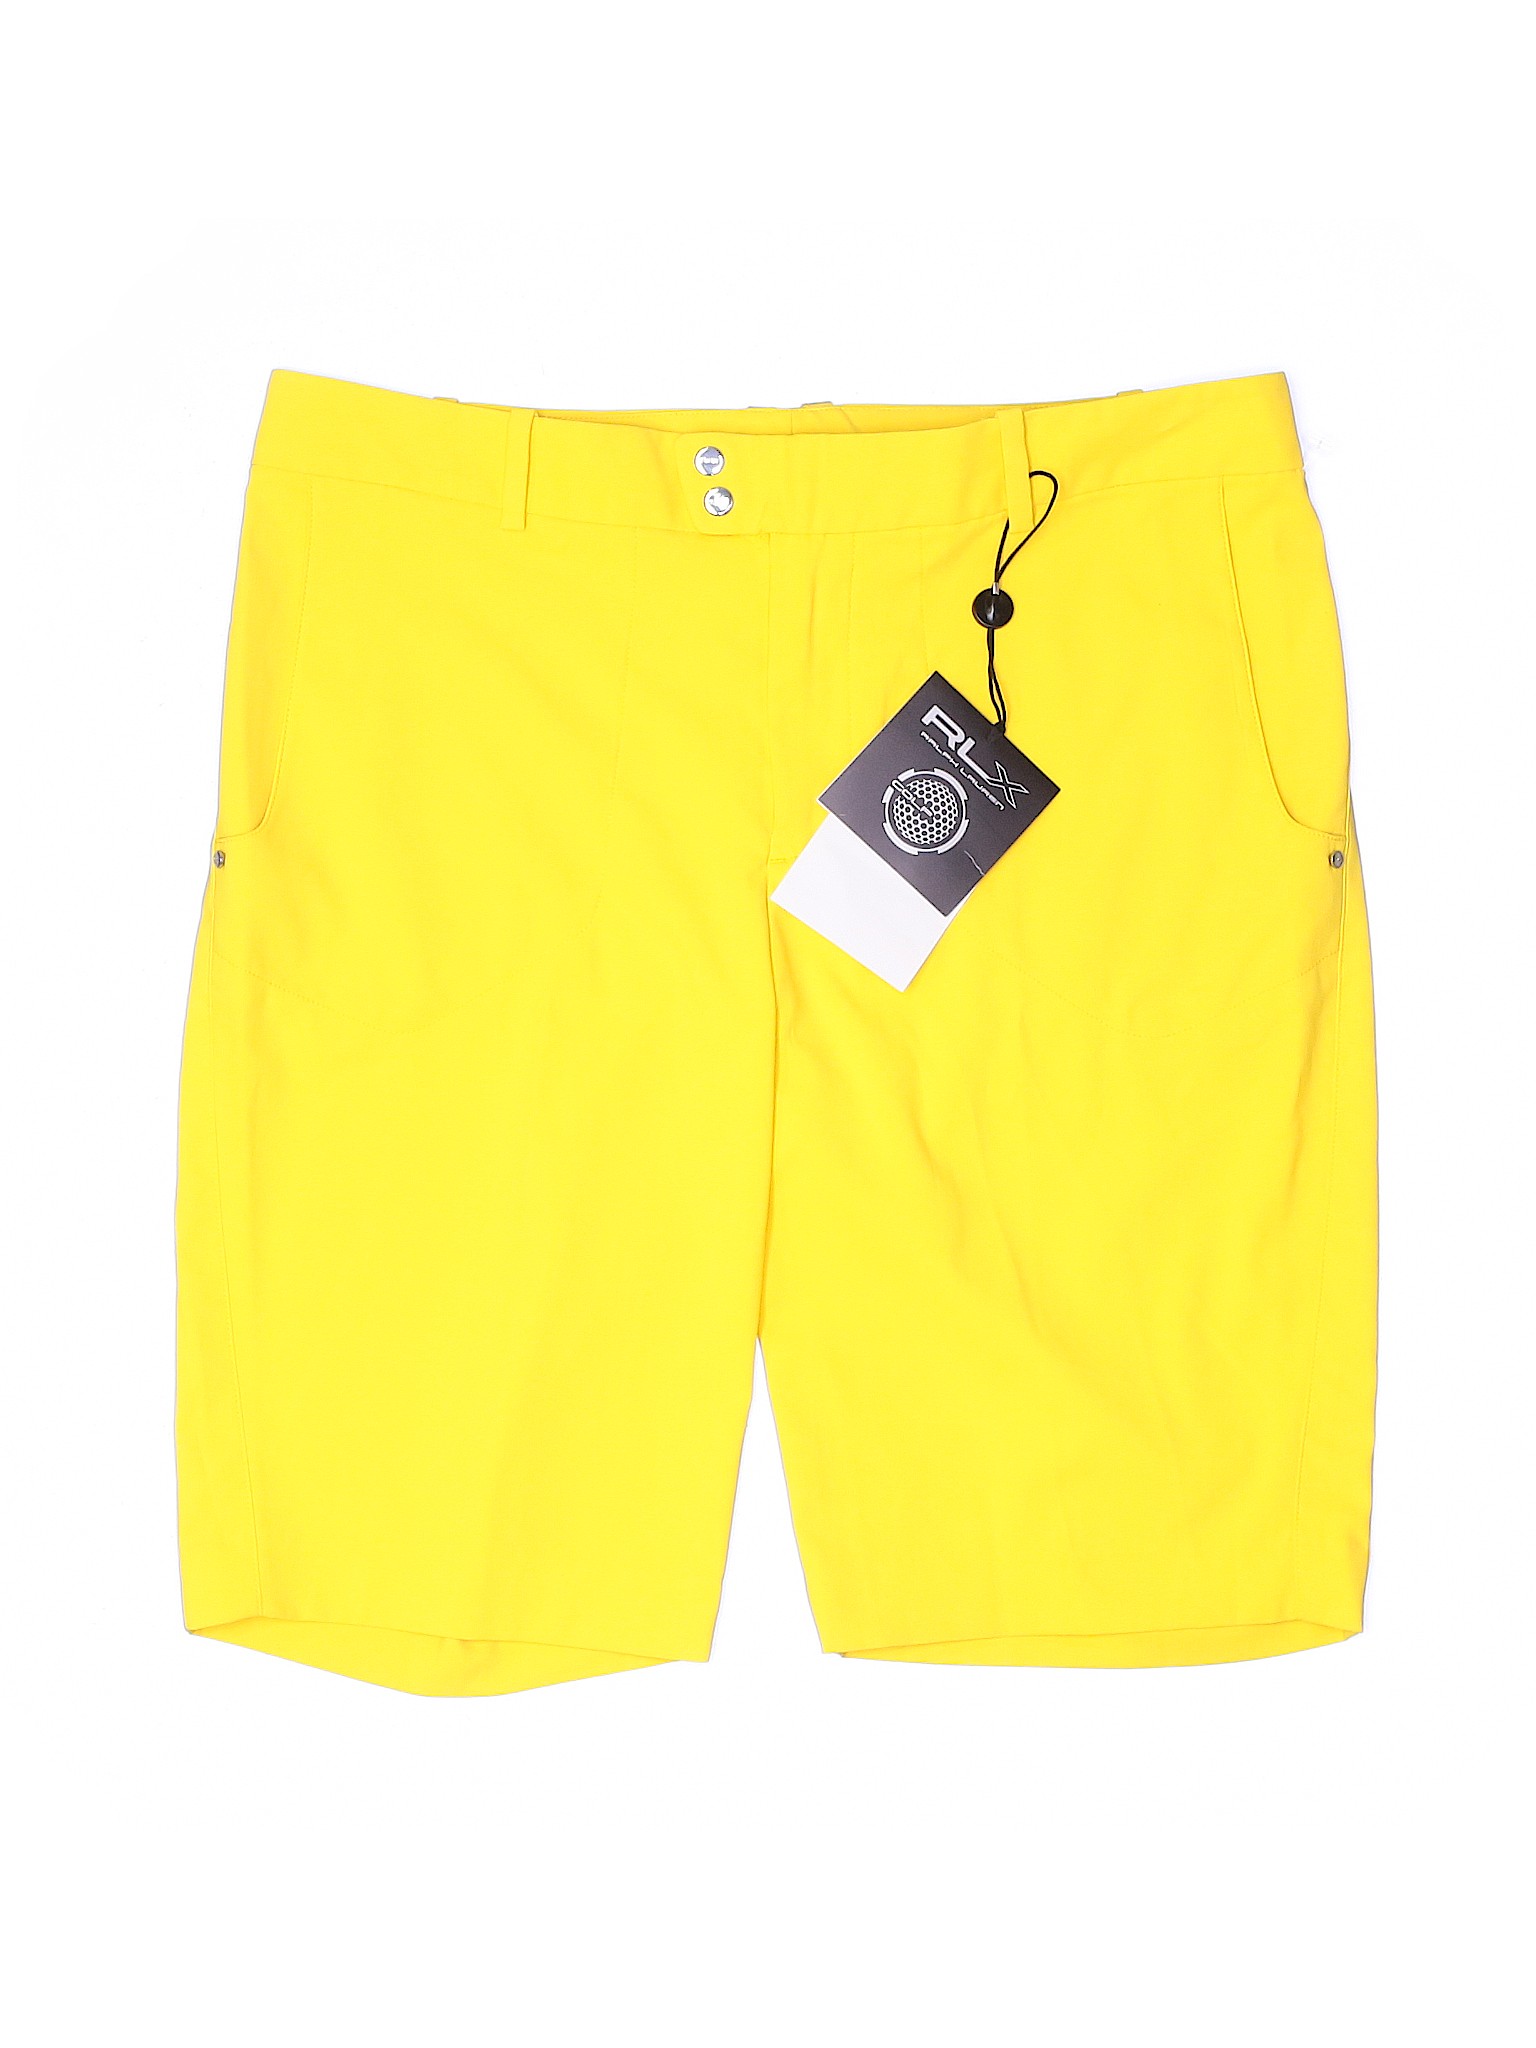 Ralph Lauren Solid Yellow Shorts Size 4 - 77% off | thredUP